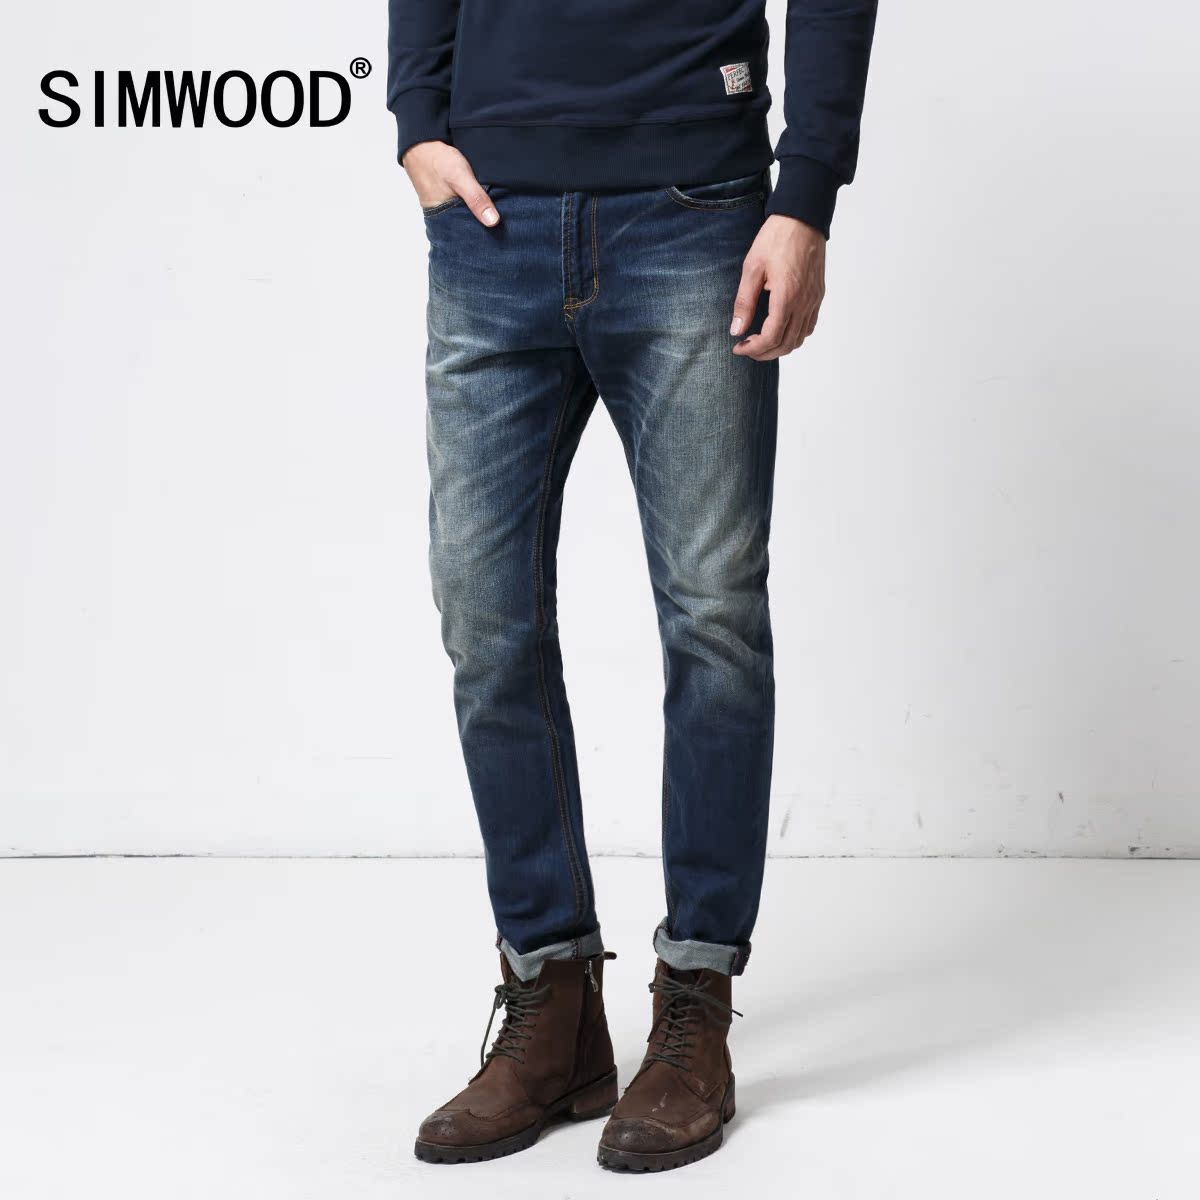   Simwood